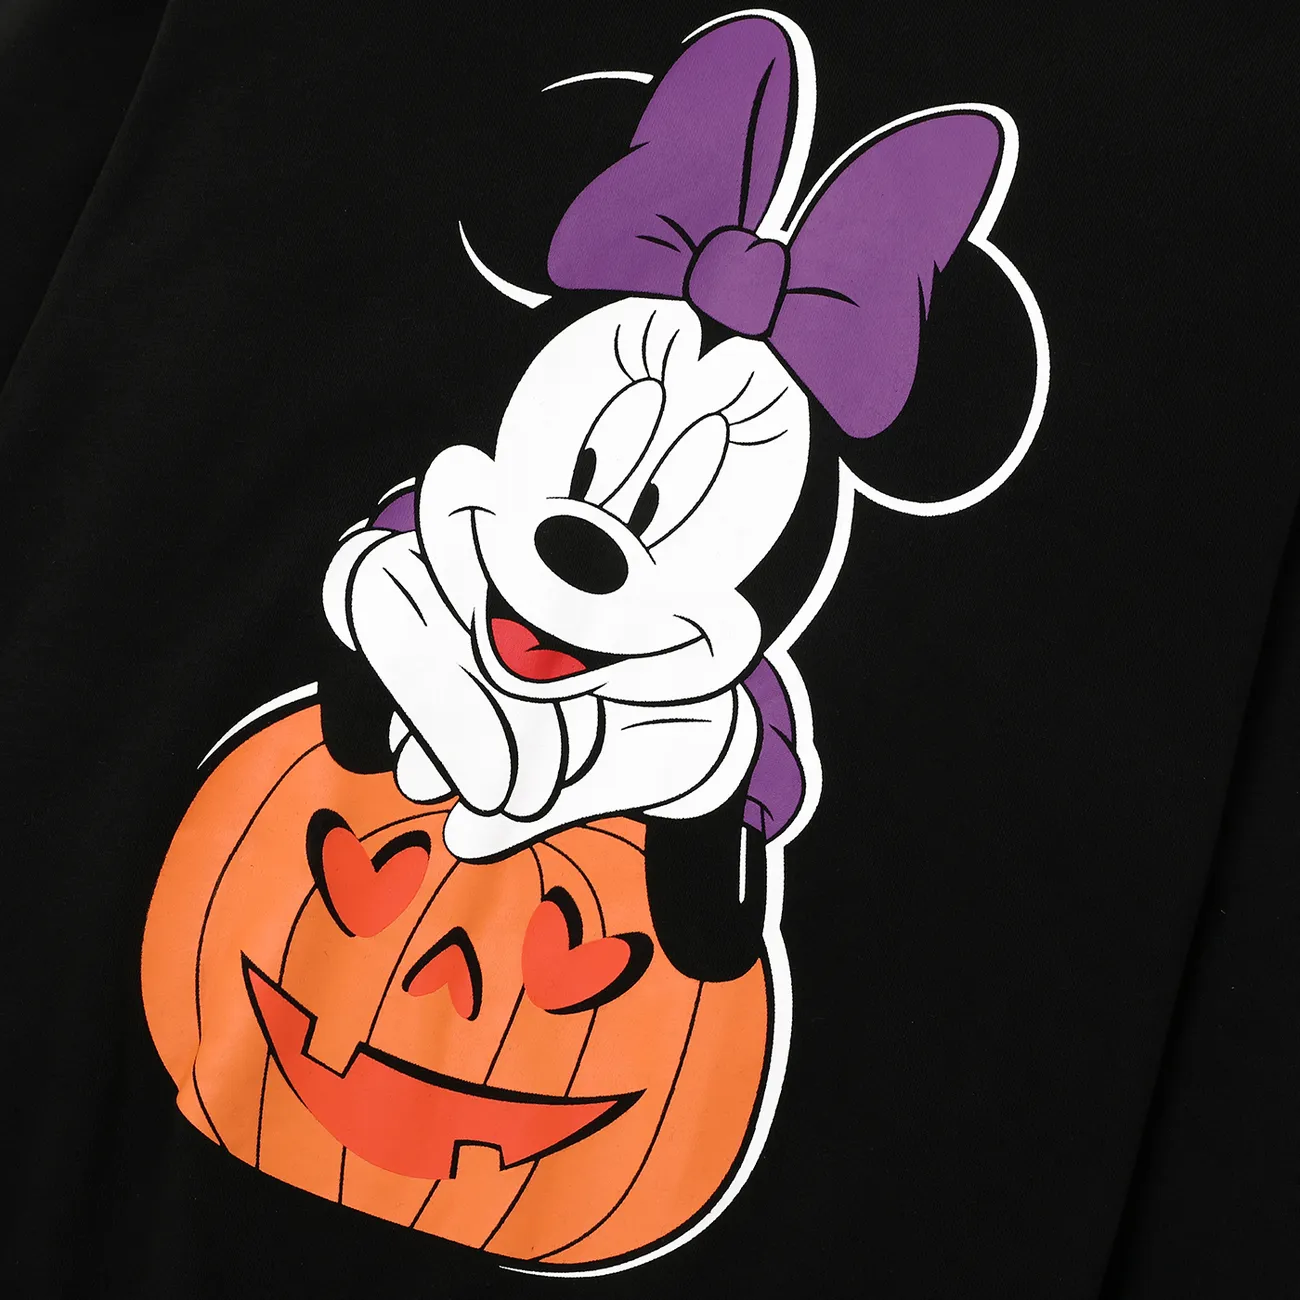 Disney Mickey and Friends Look Familial Halloween Manches longues Tenues de famille assorties Hauts Noir big image 1